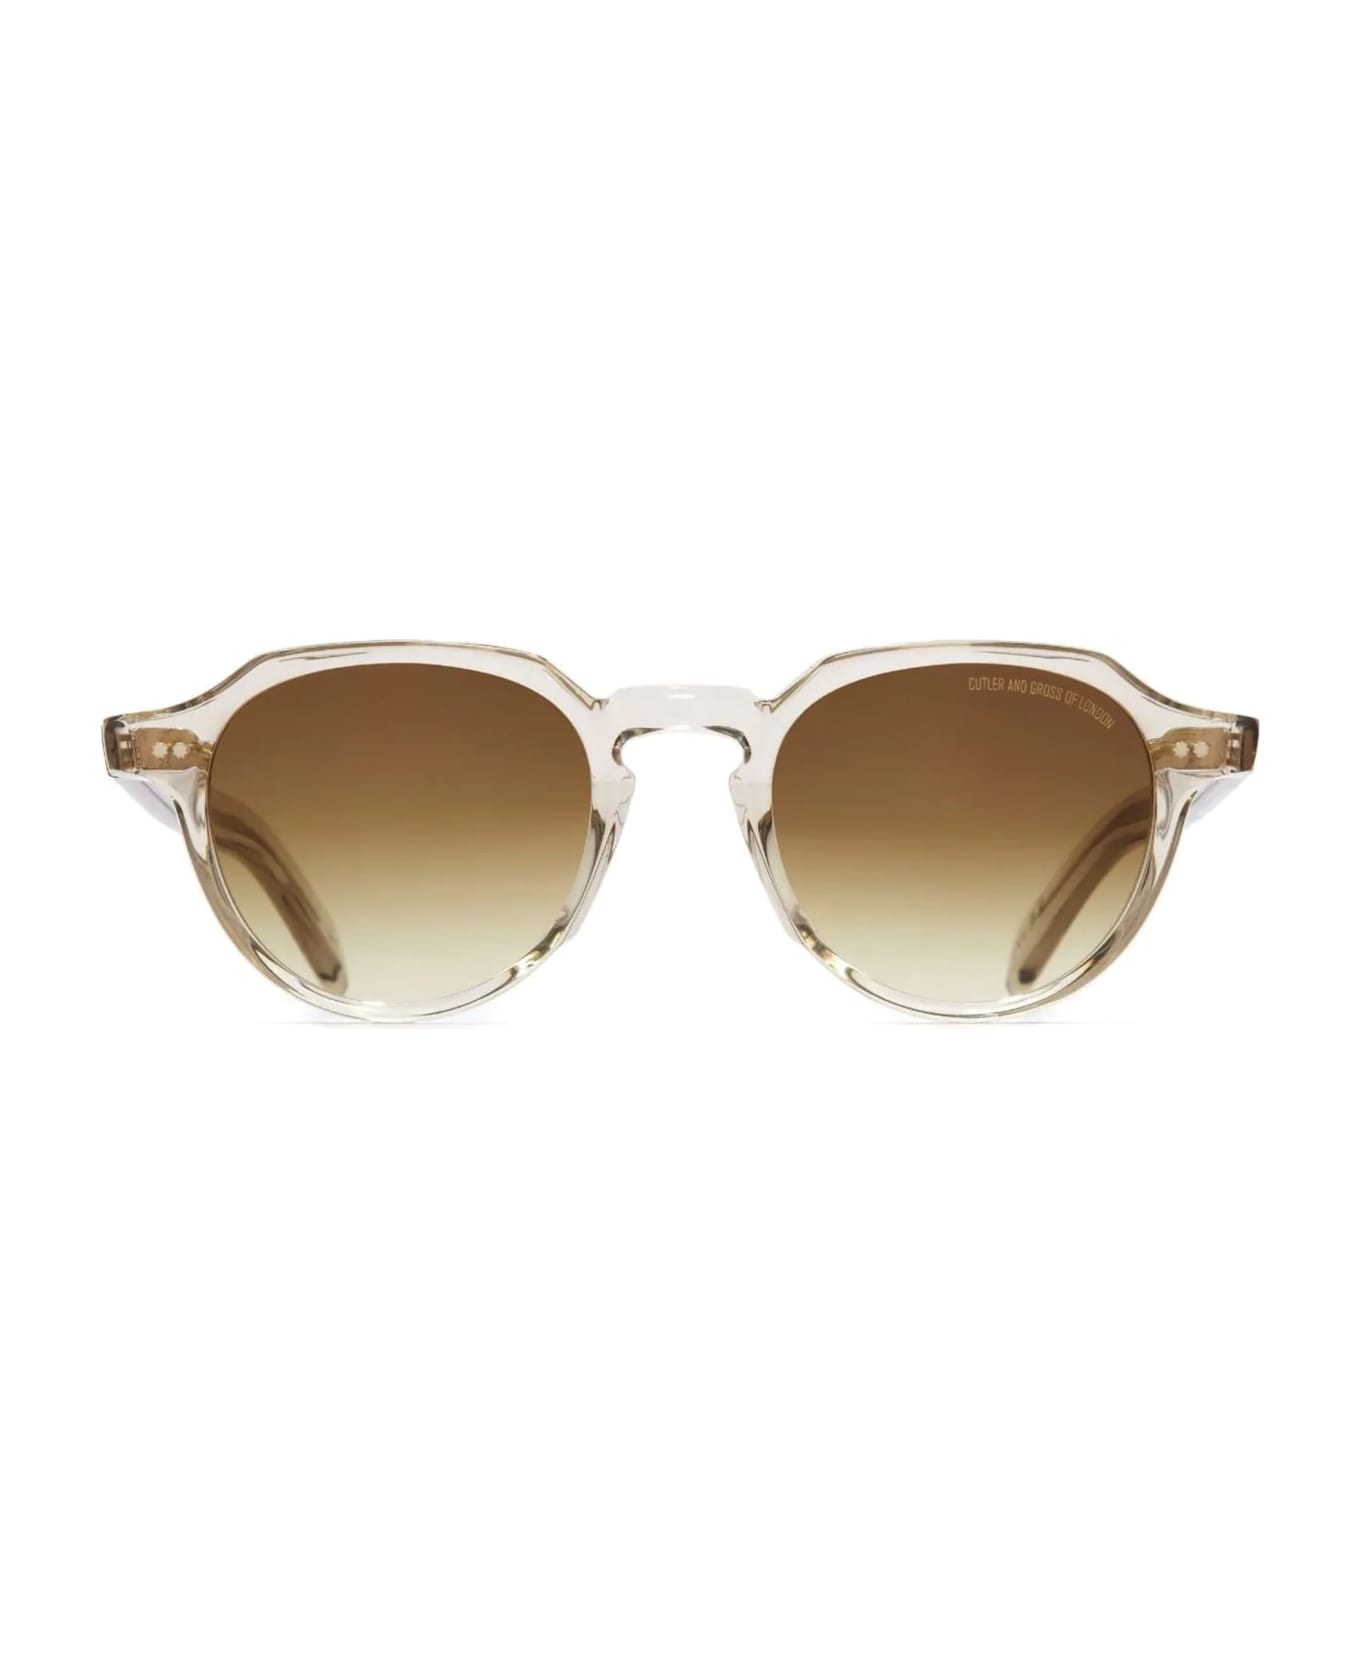 Cutler and Gross Gr06 / Sand Crystal Sunglasses - beige